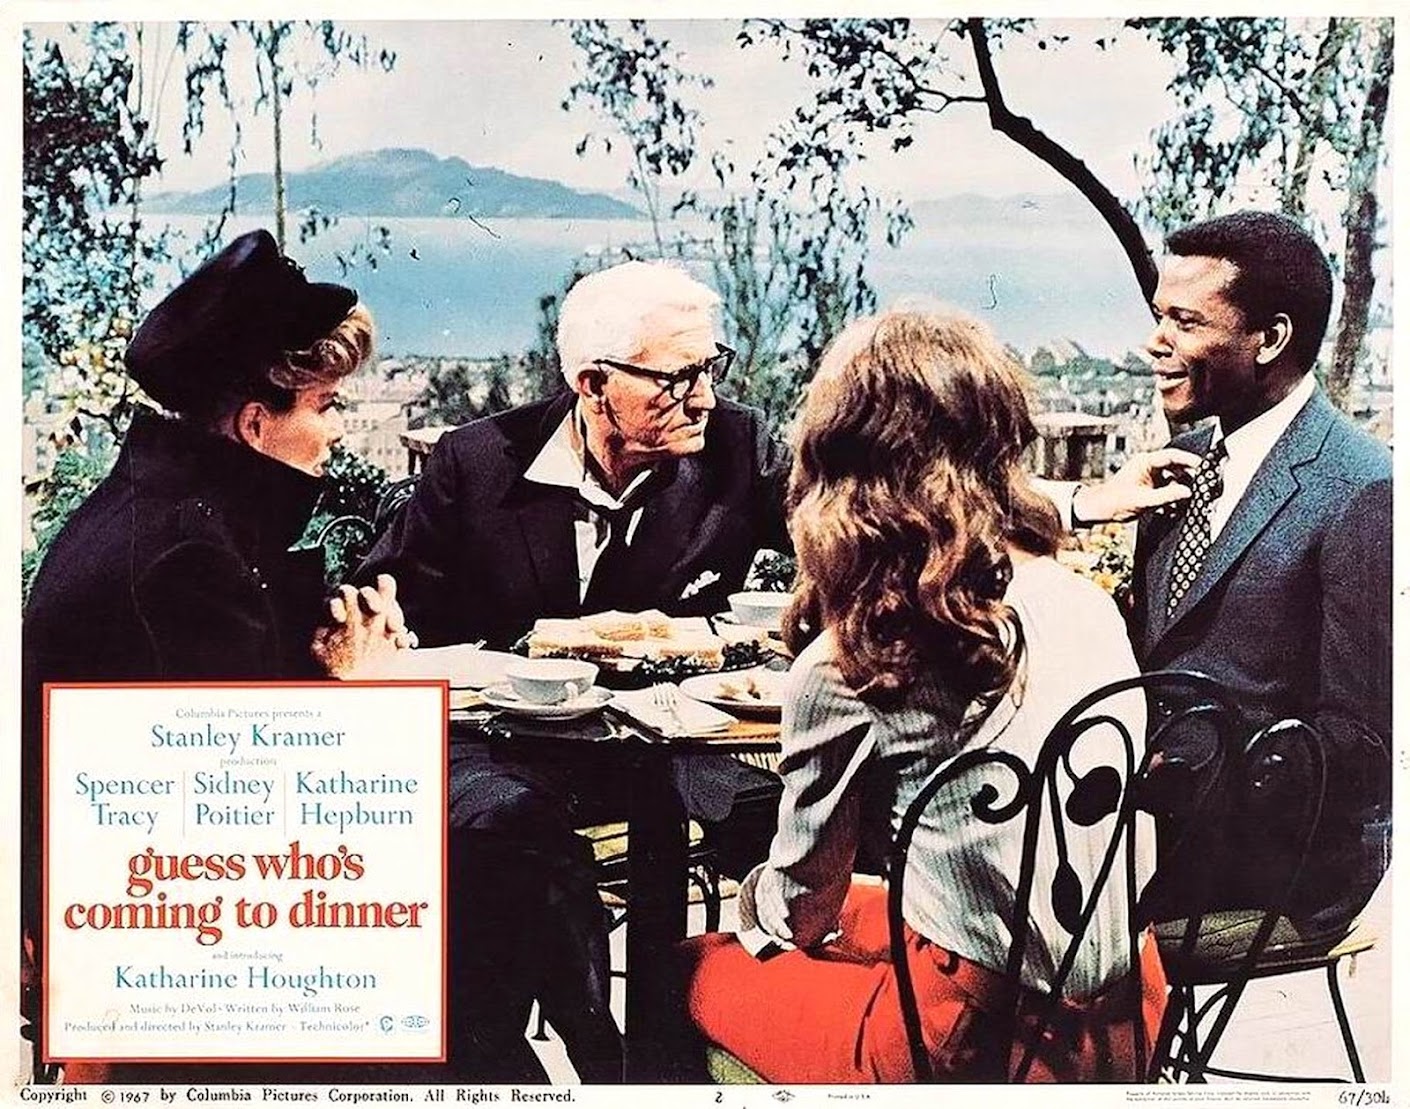 Devine qui vient dîner... (1967) Stanley Kramer - Guess who's coming to dinner